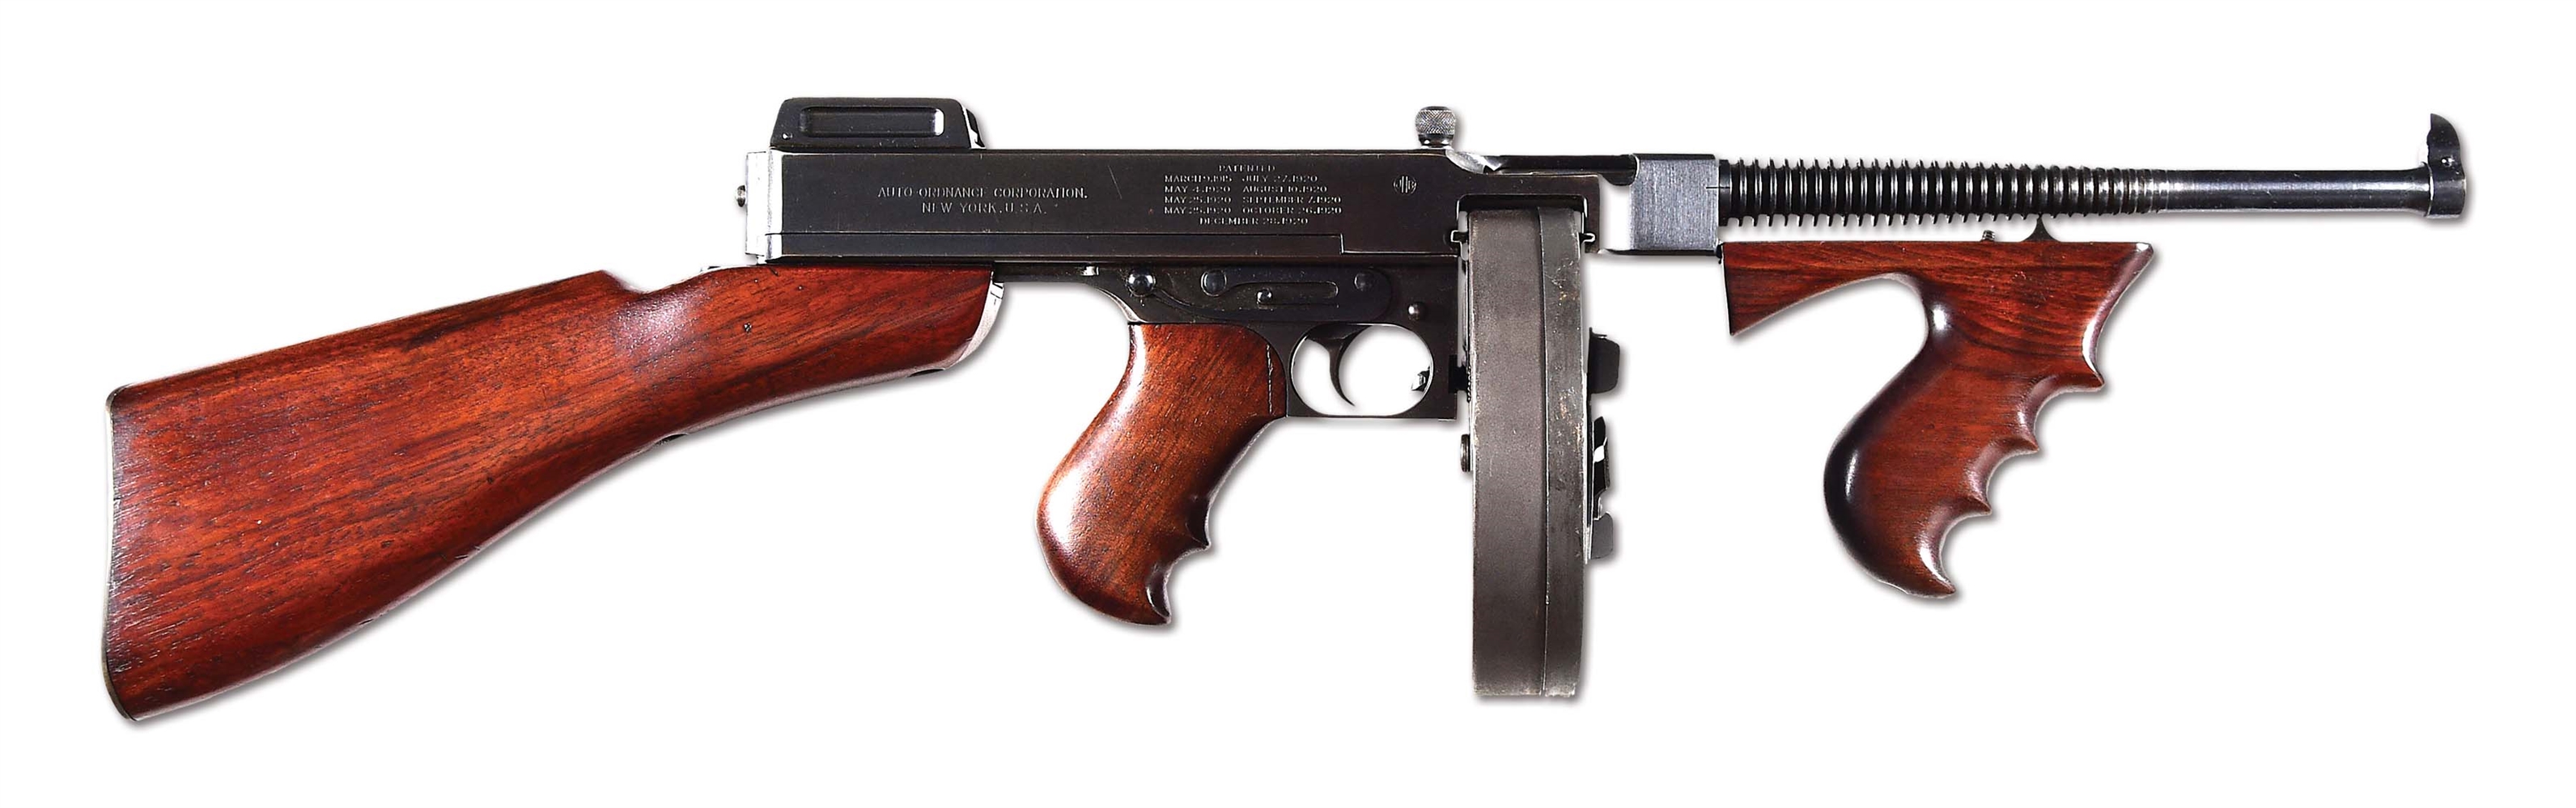 (N) EXCEPTIONAL ORIGINAL CONDITION COLT 1921A THOMPSON 1921 MACHINE GUN (CURIO AND RELIC).